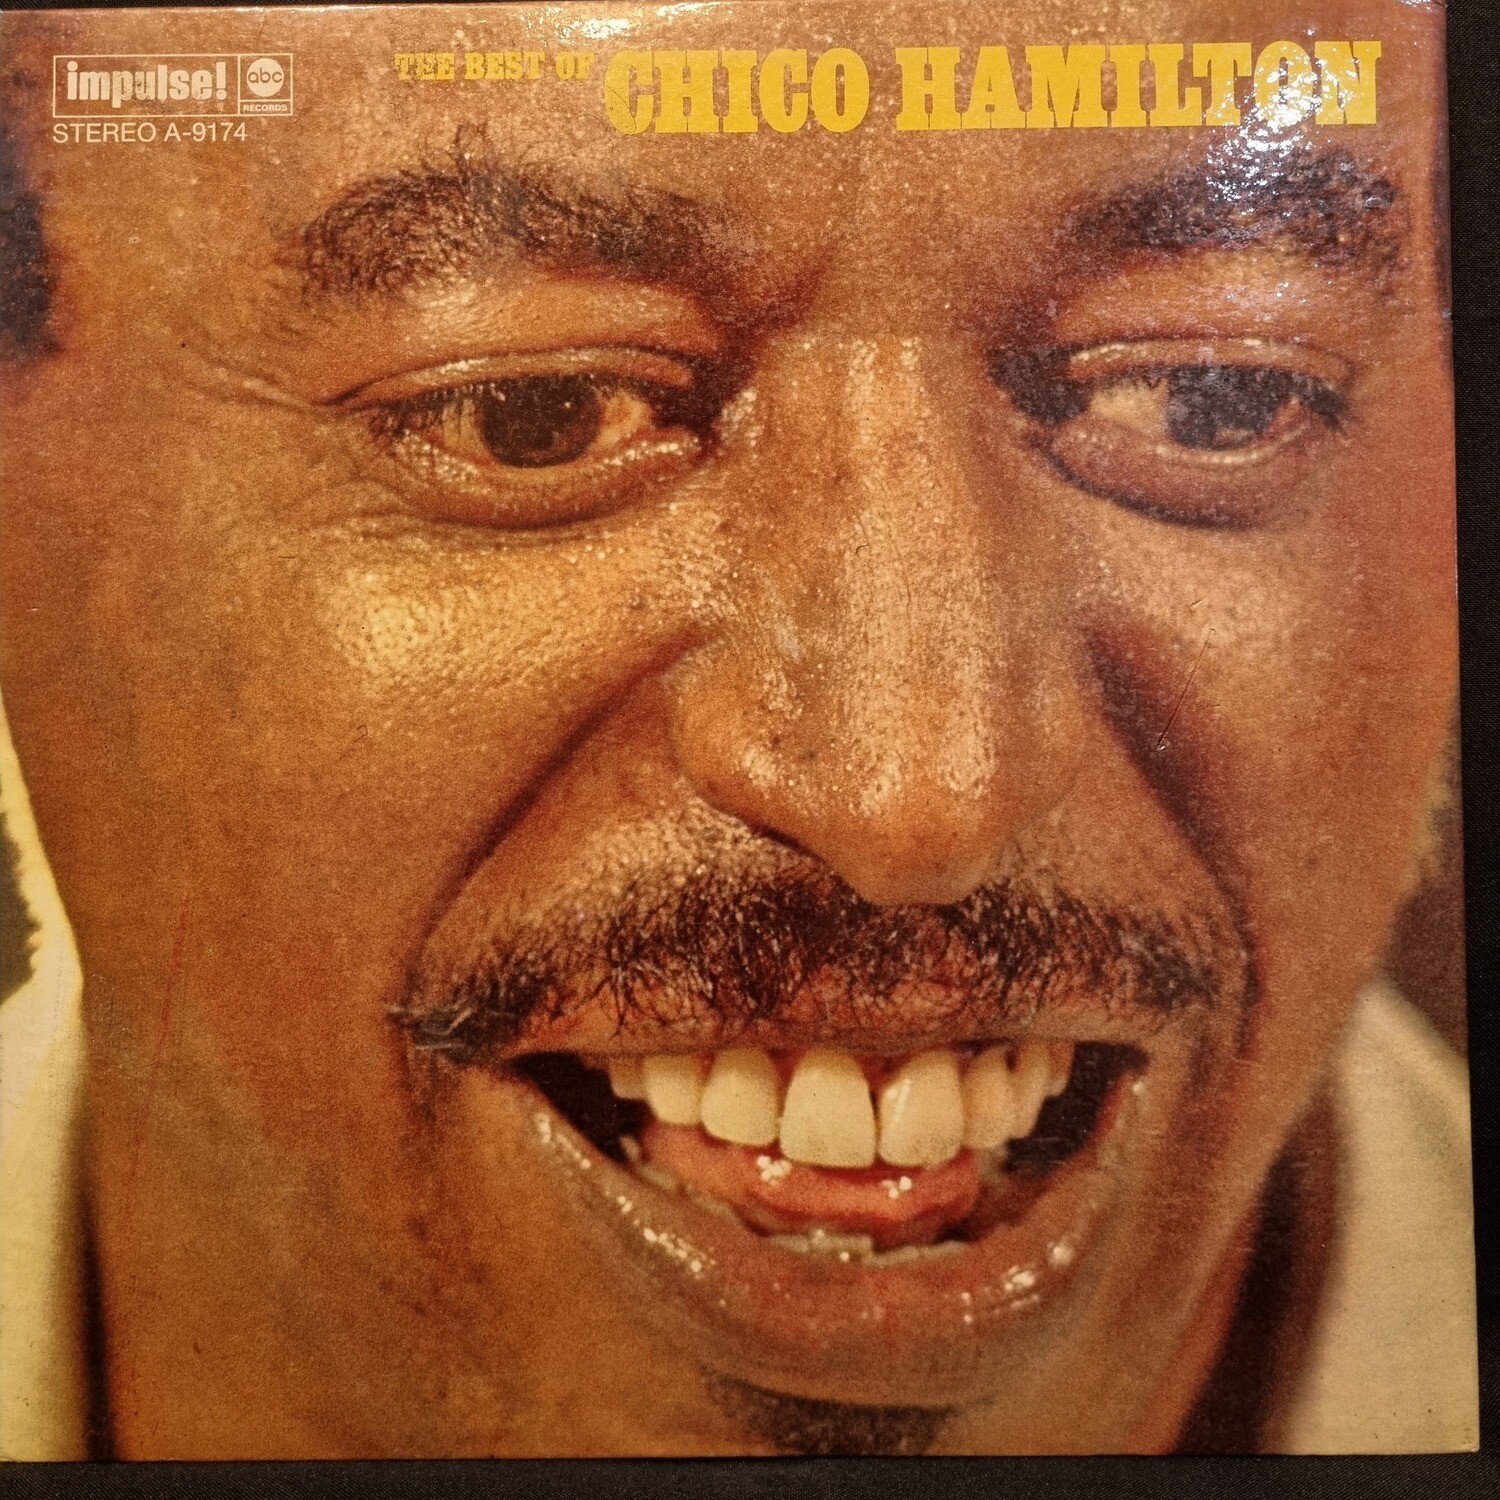 Chico Hamilton- The Best of Chico Hamilton